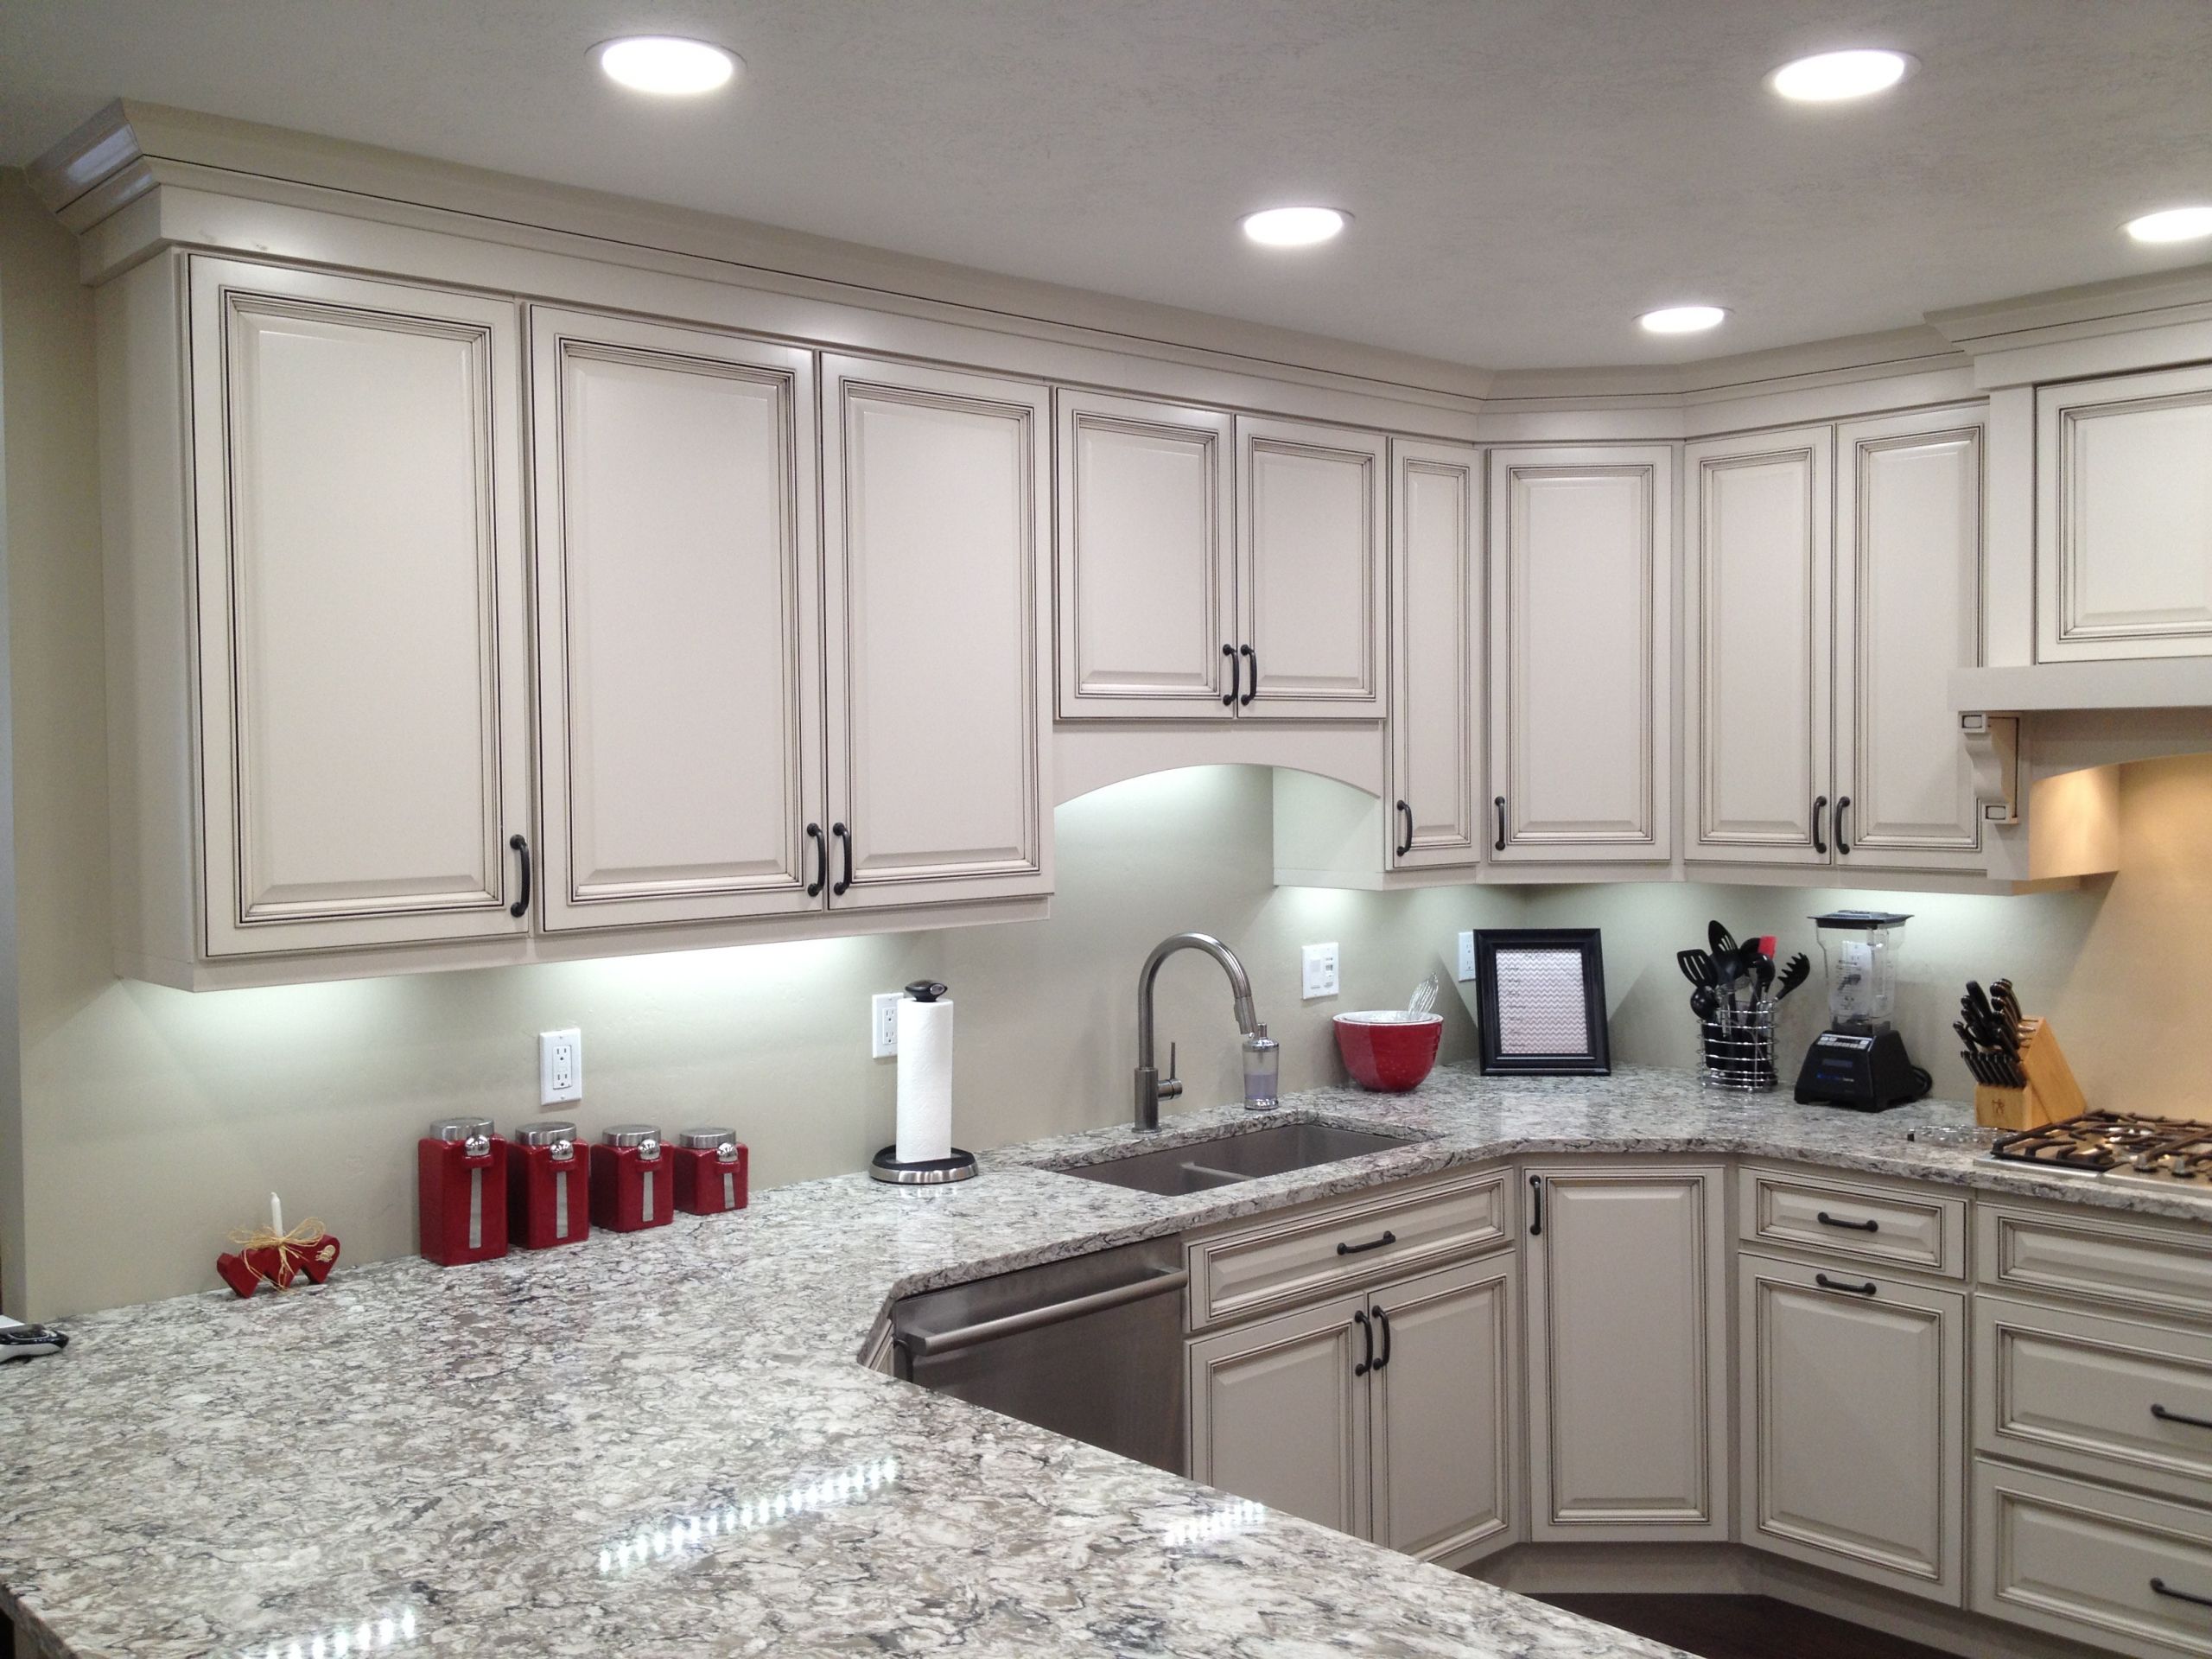 Led Kitchen Under Cabinet Lighting
 Look to LEDs when Upgrading Lighting